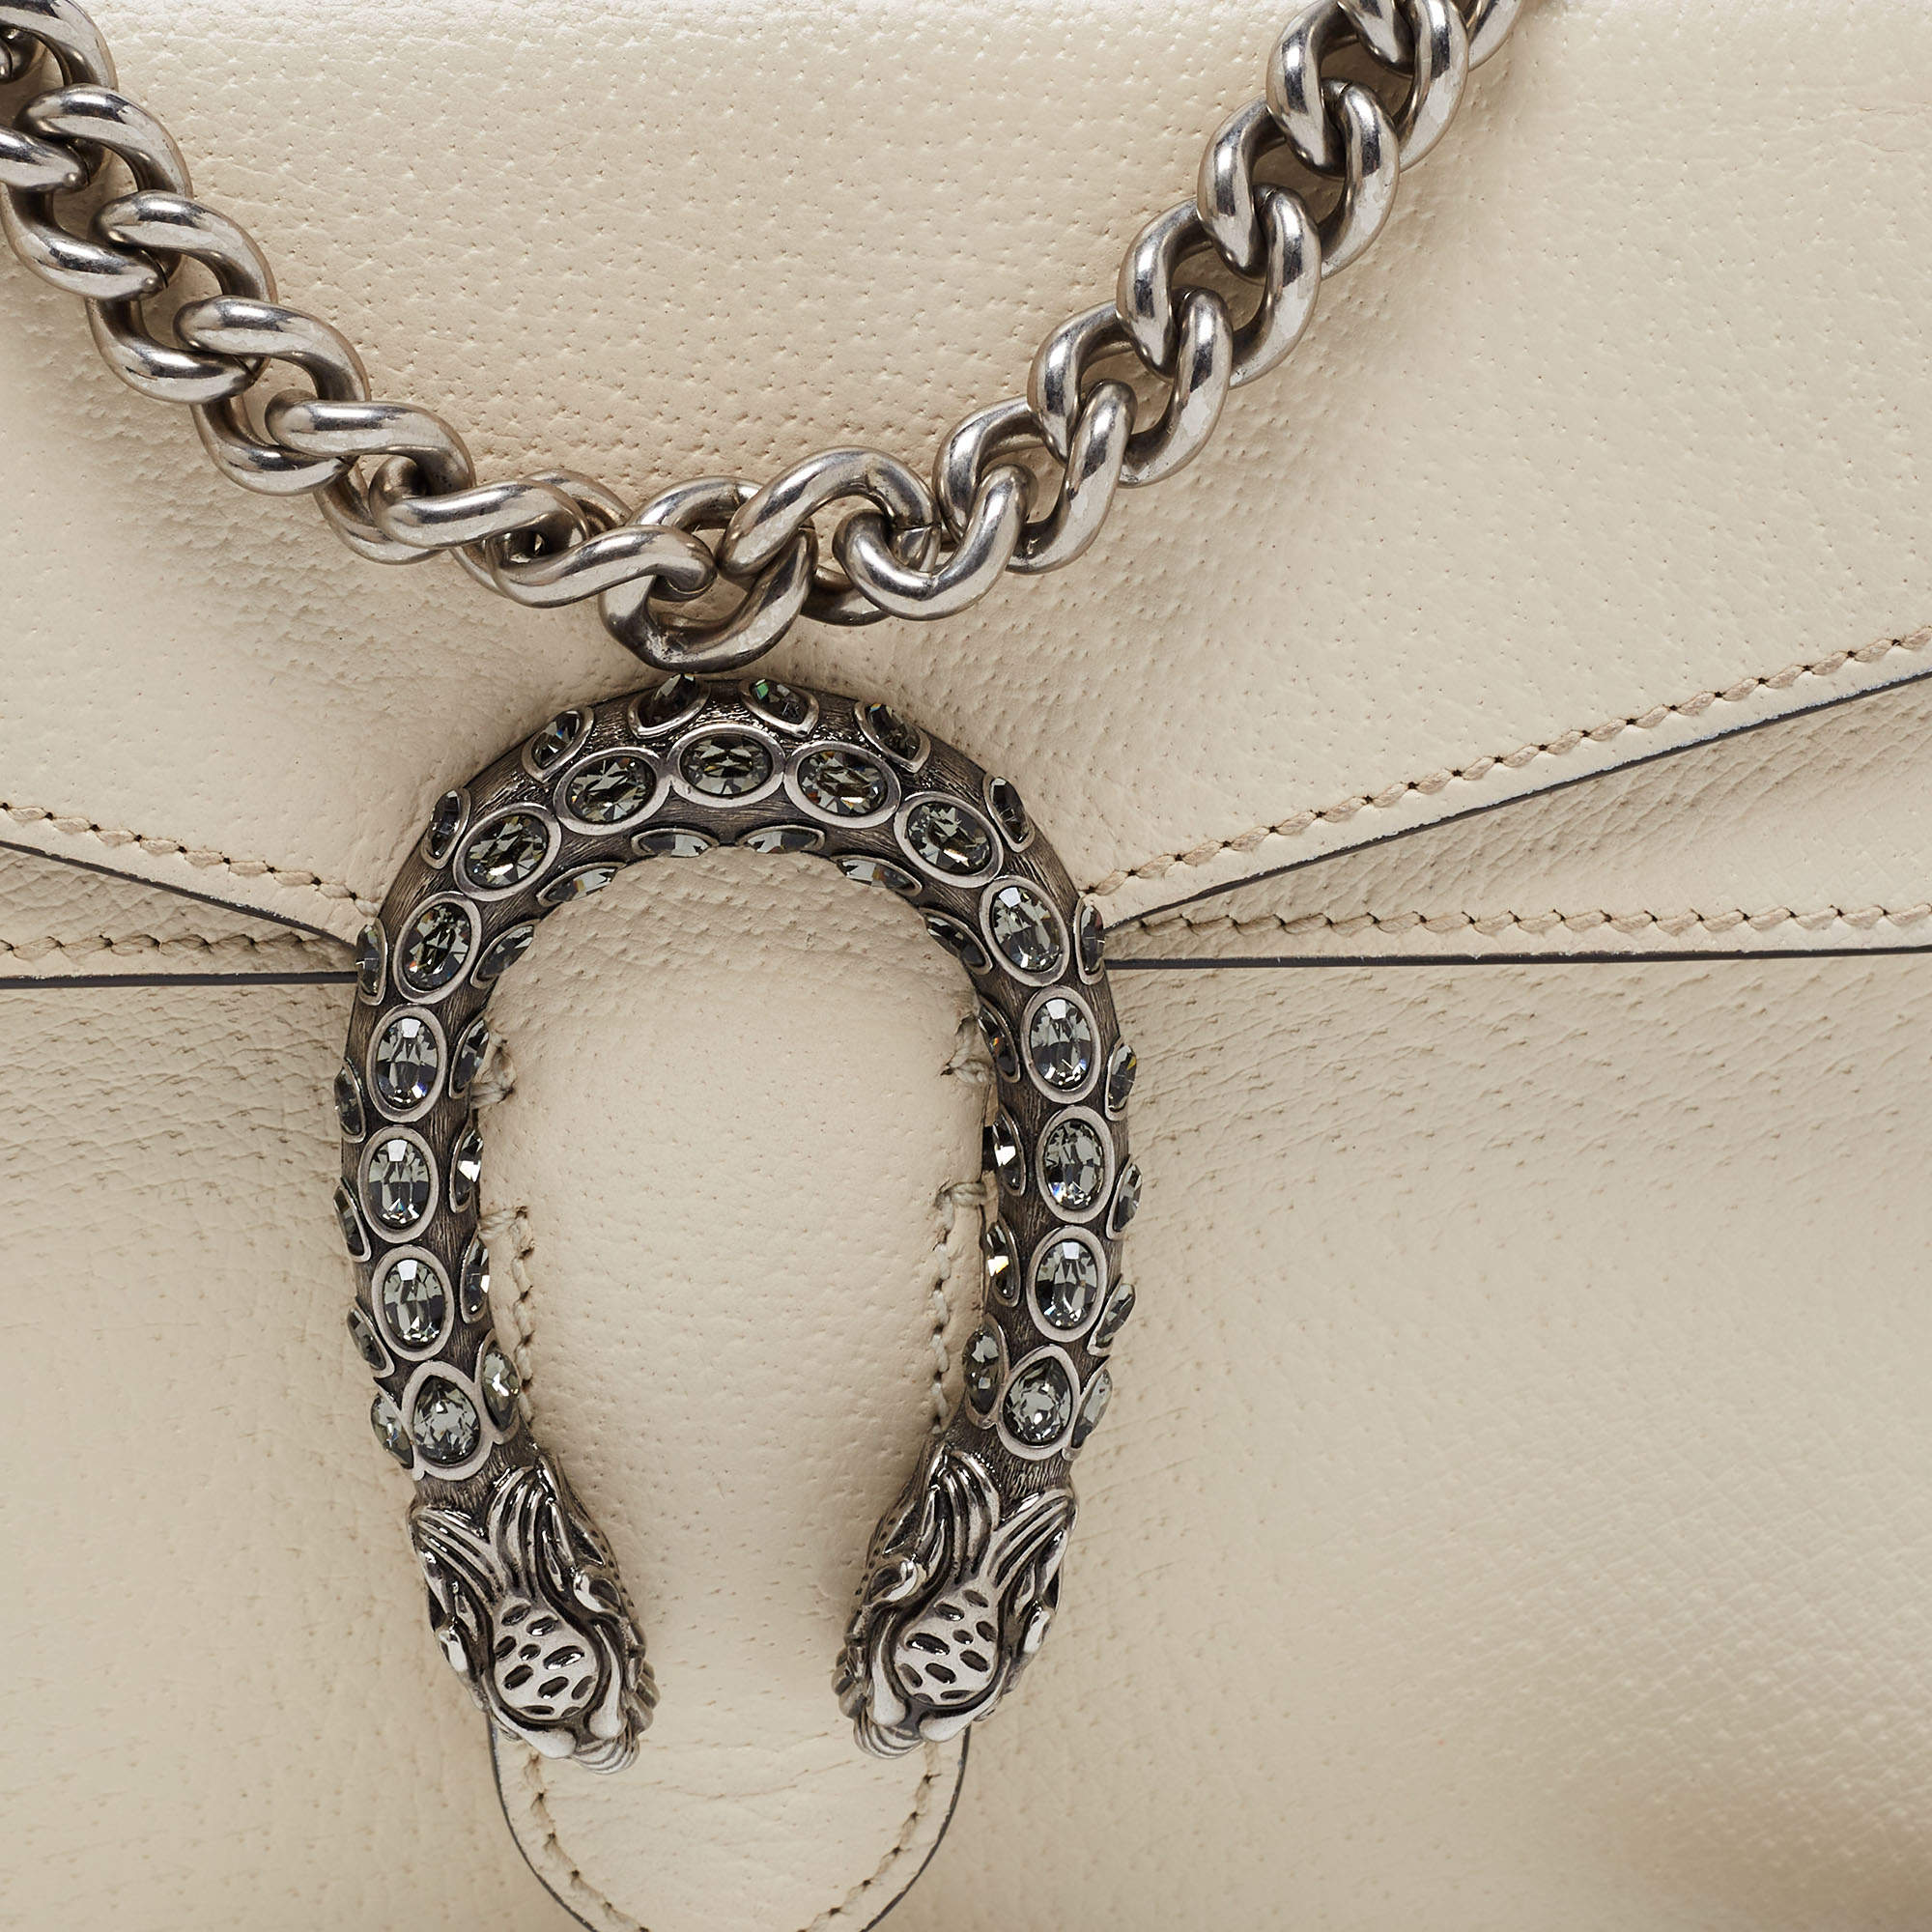 Gucci Ladies Dionysus Mini White Leather Shoulder Bag 421970 0K7JN 9680 -  Handbags, Dionysus - Jomashop